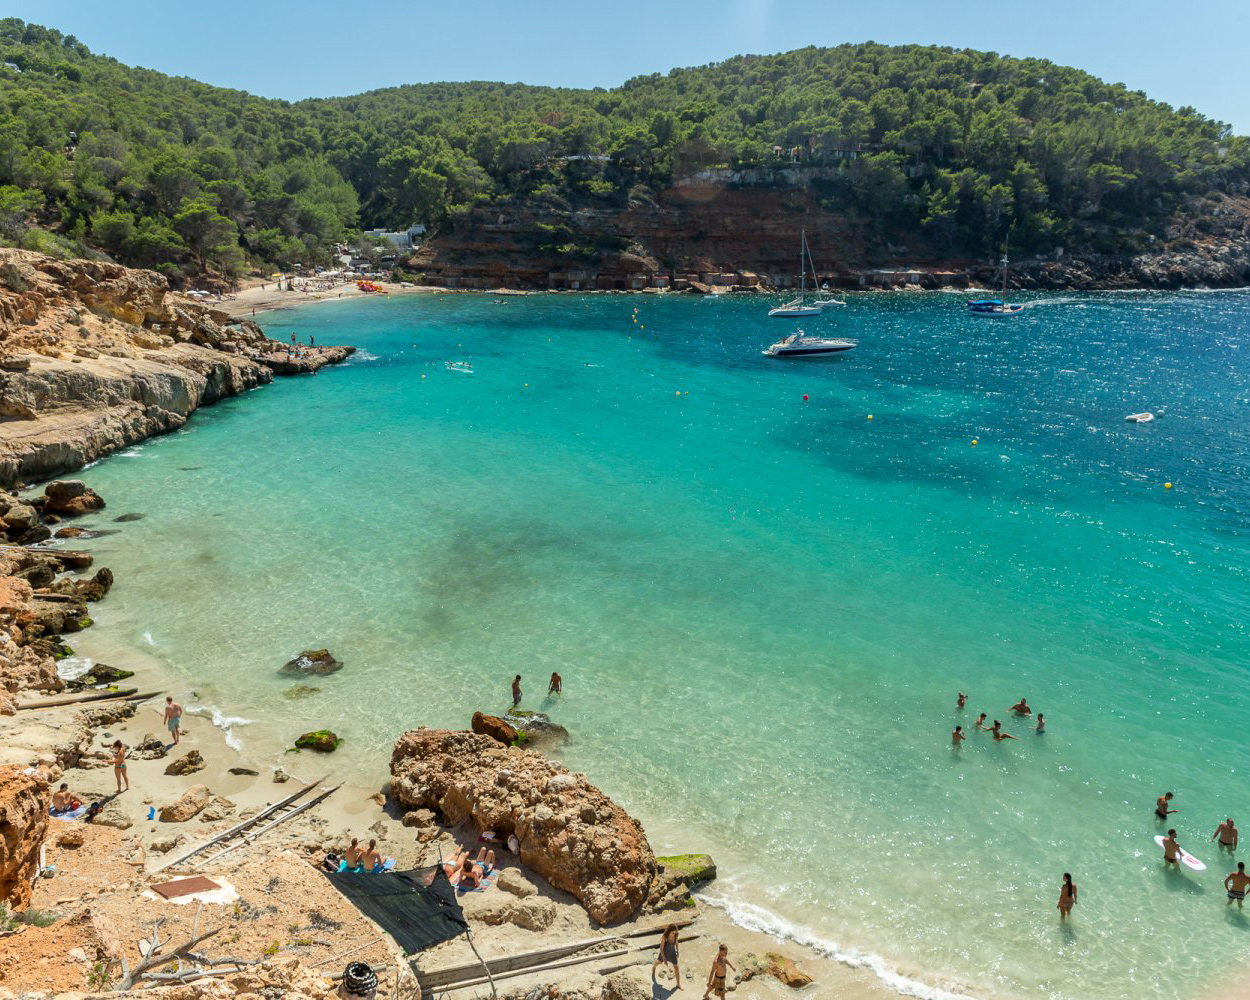 A guide to Ibiza, Balearic Islands, by the Safara travel team